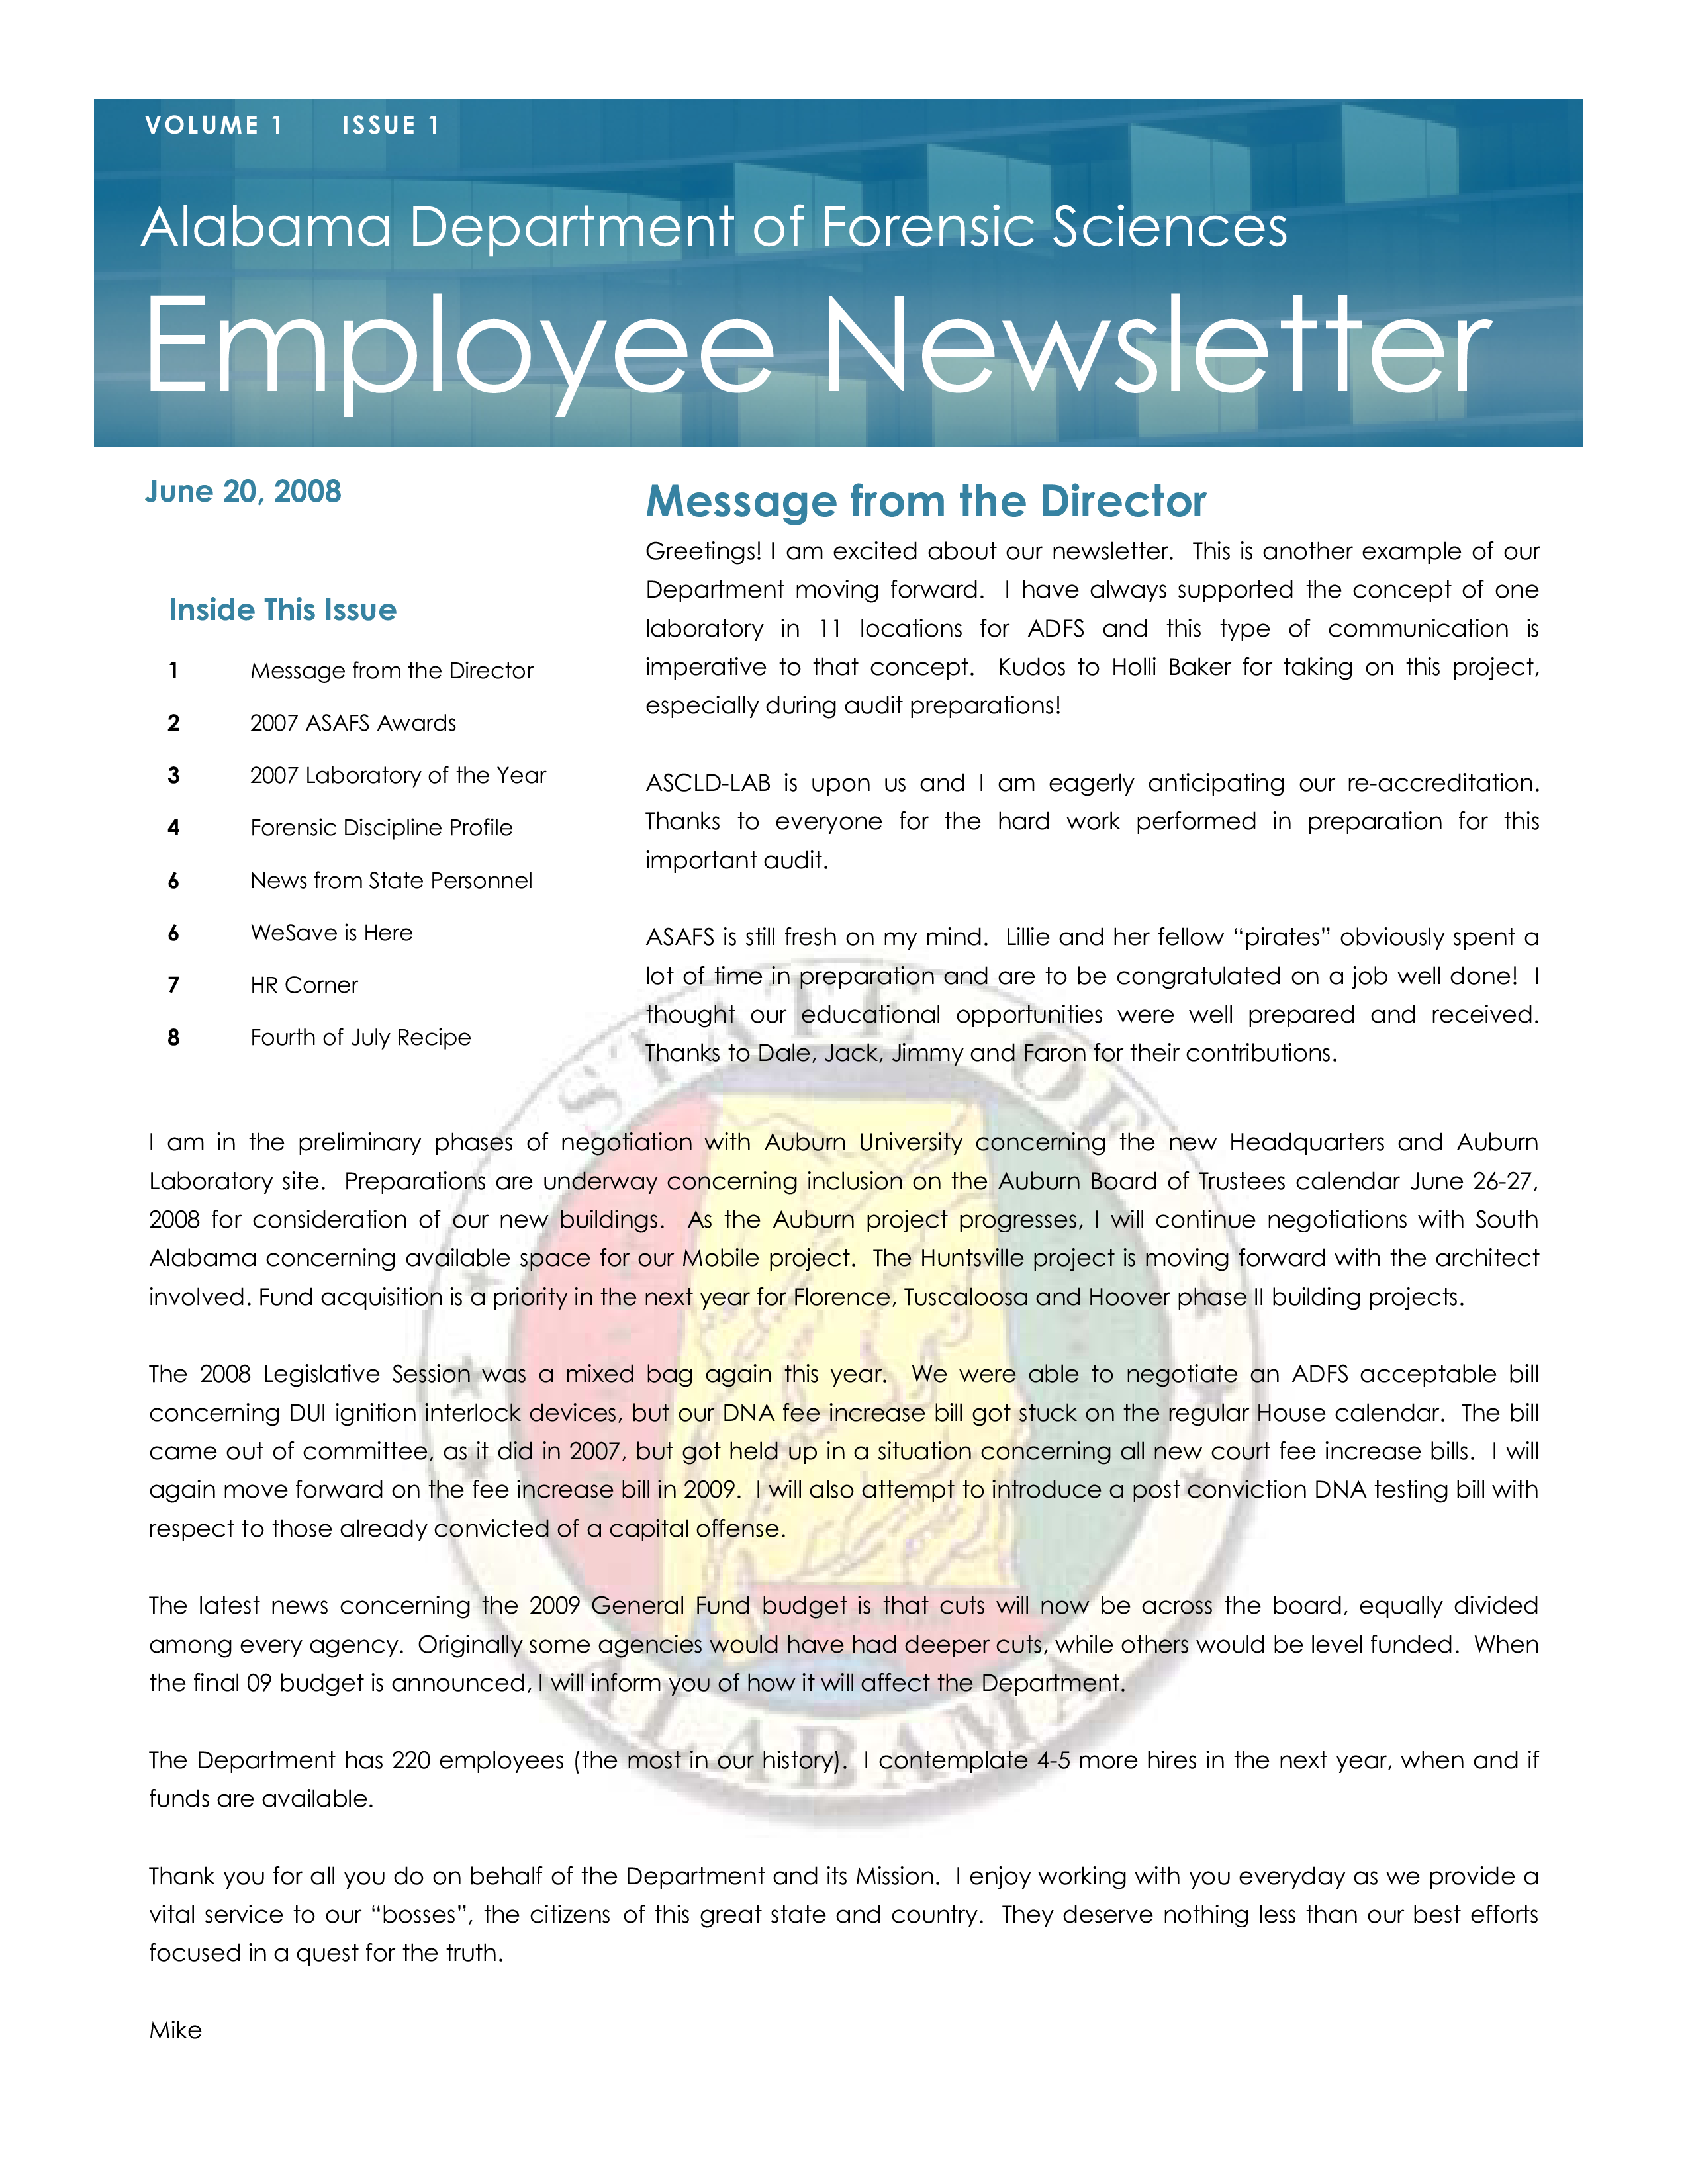 employee newsletters effective